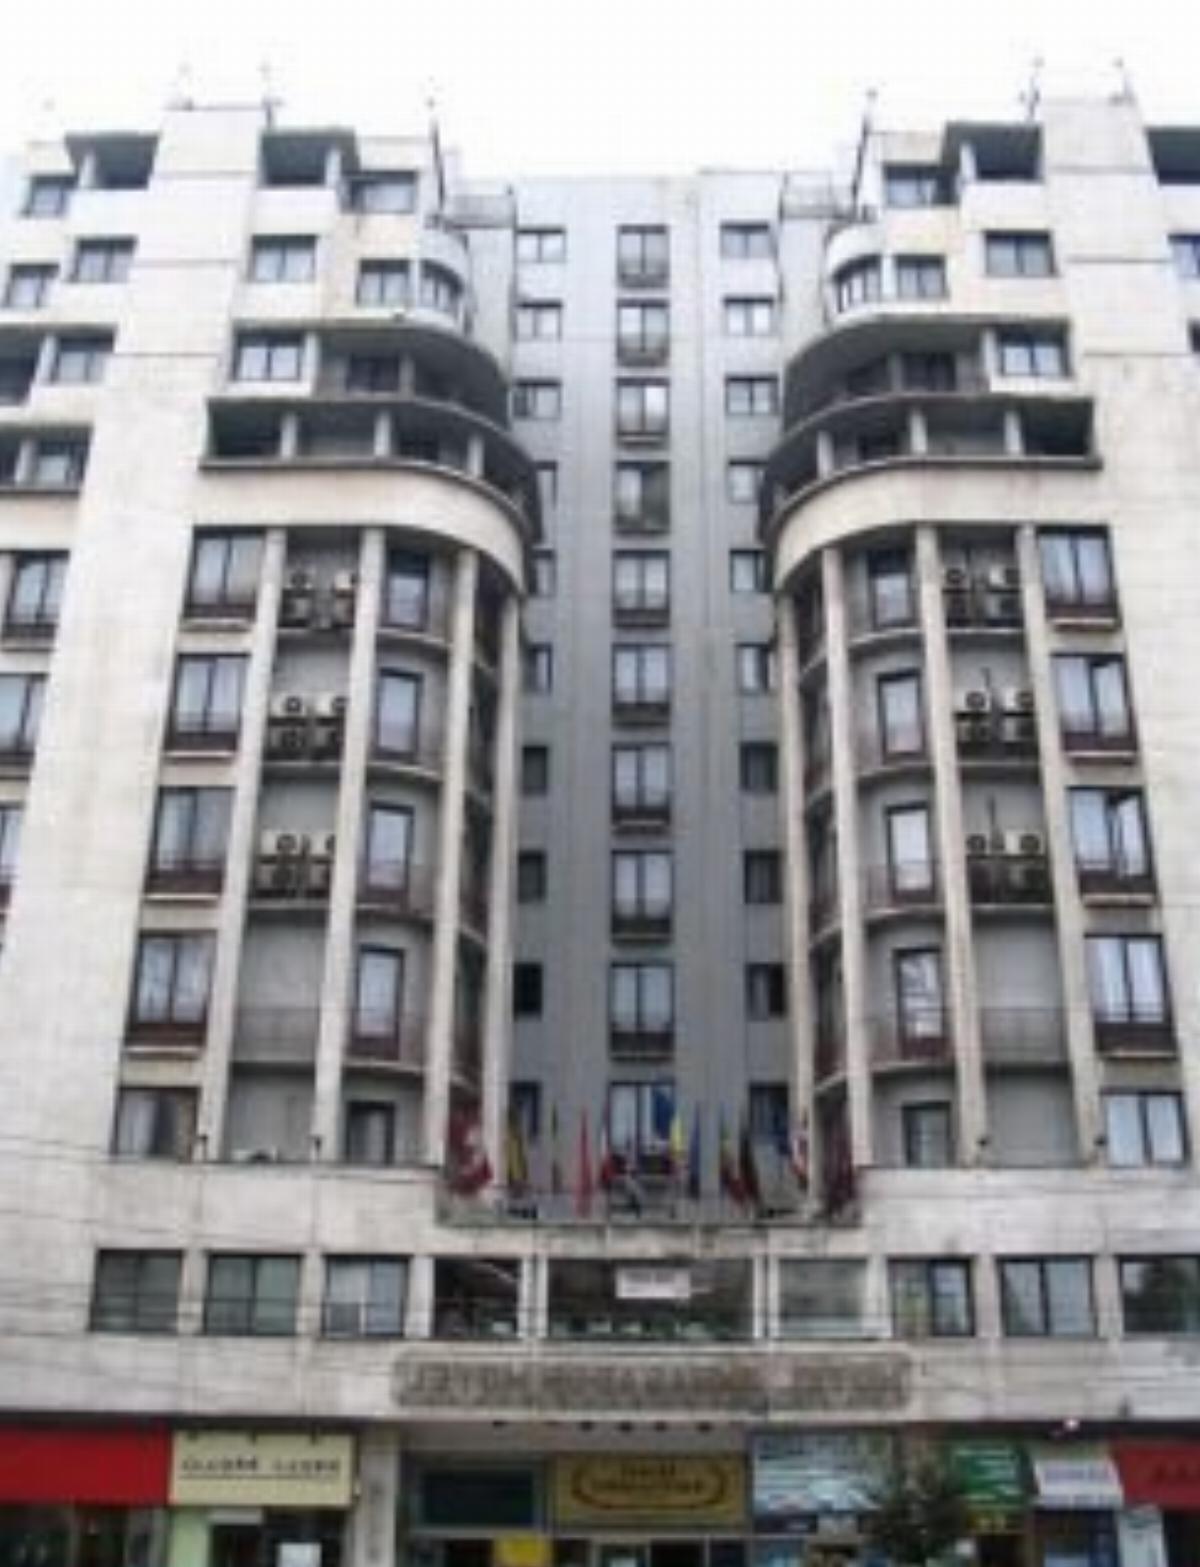 Ambassador Hotel Bucharest Romania